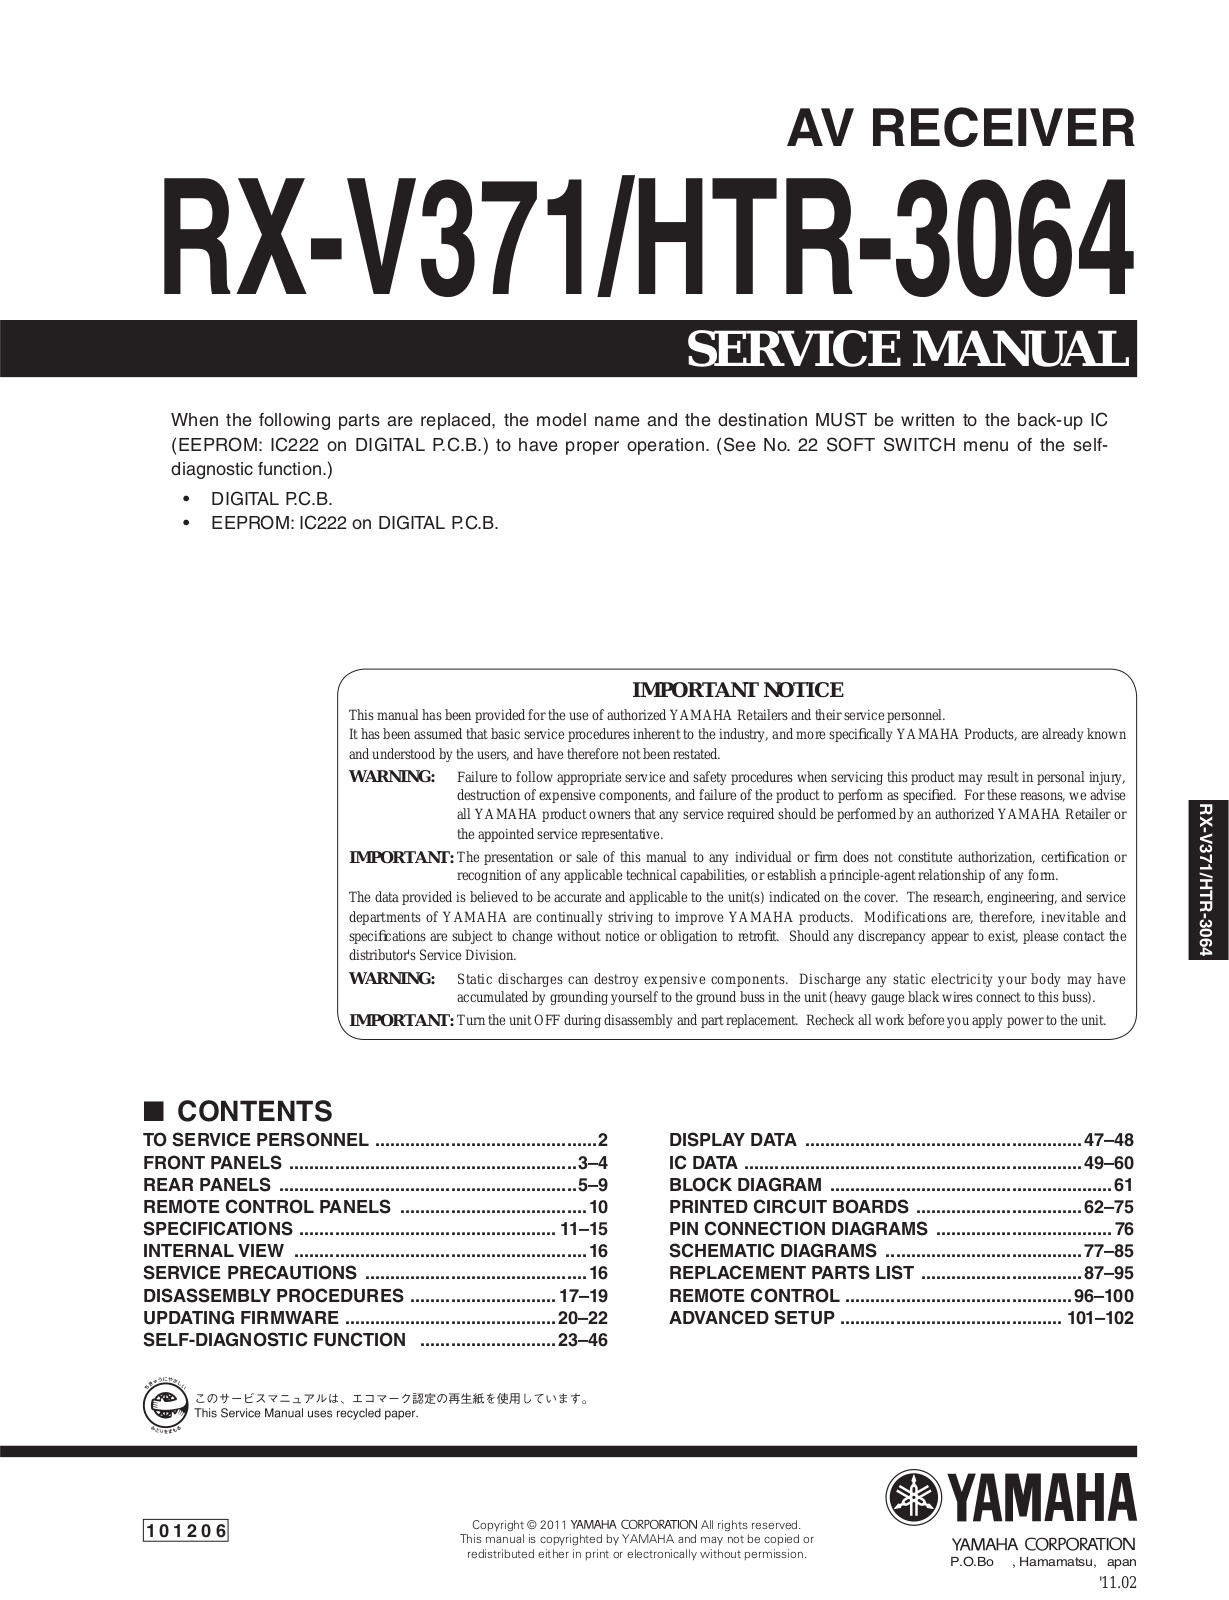 Yamaha RX-V371, HTR-3064 Service manual